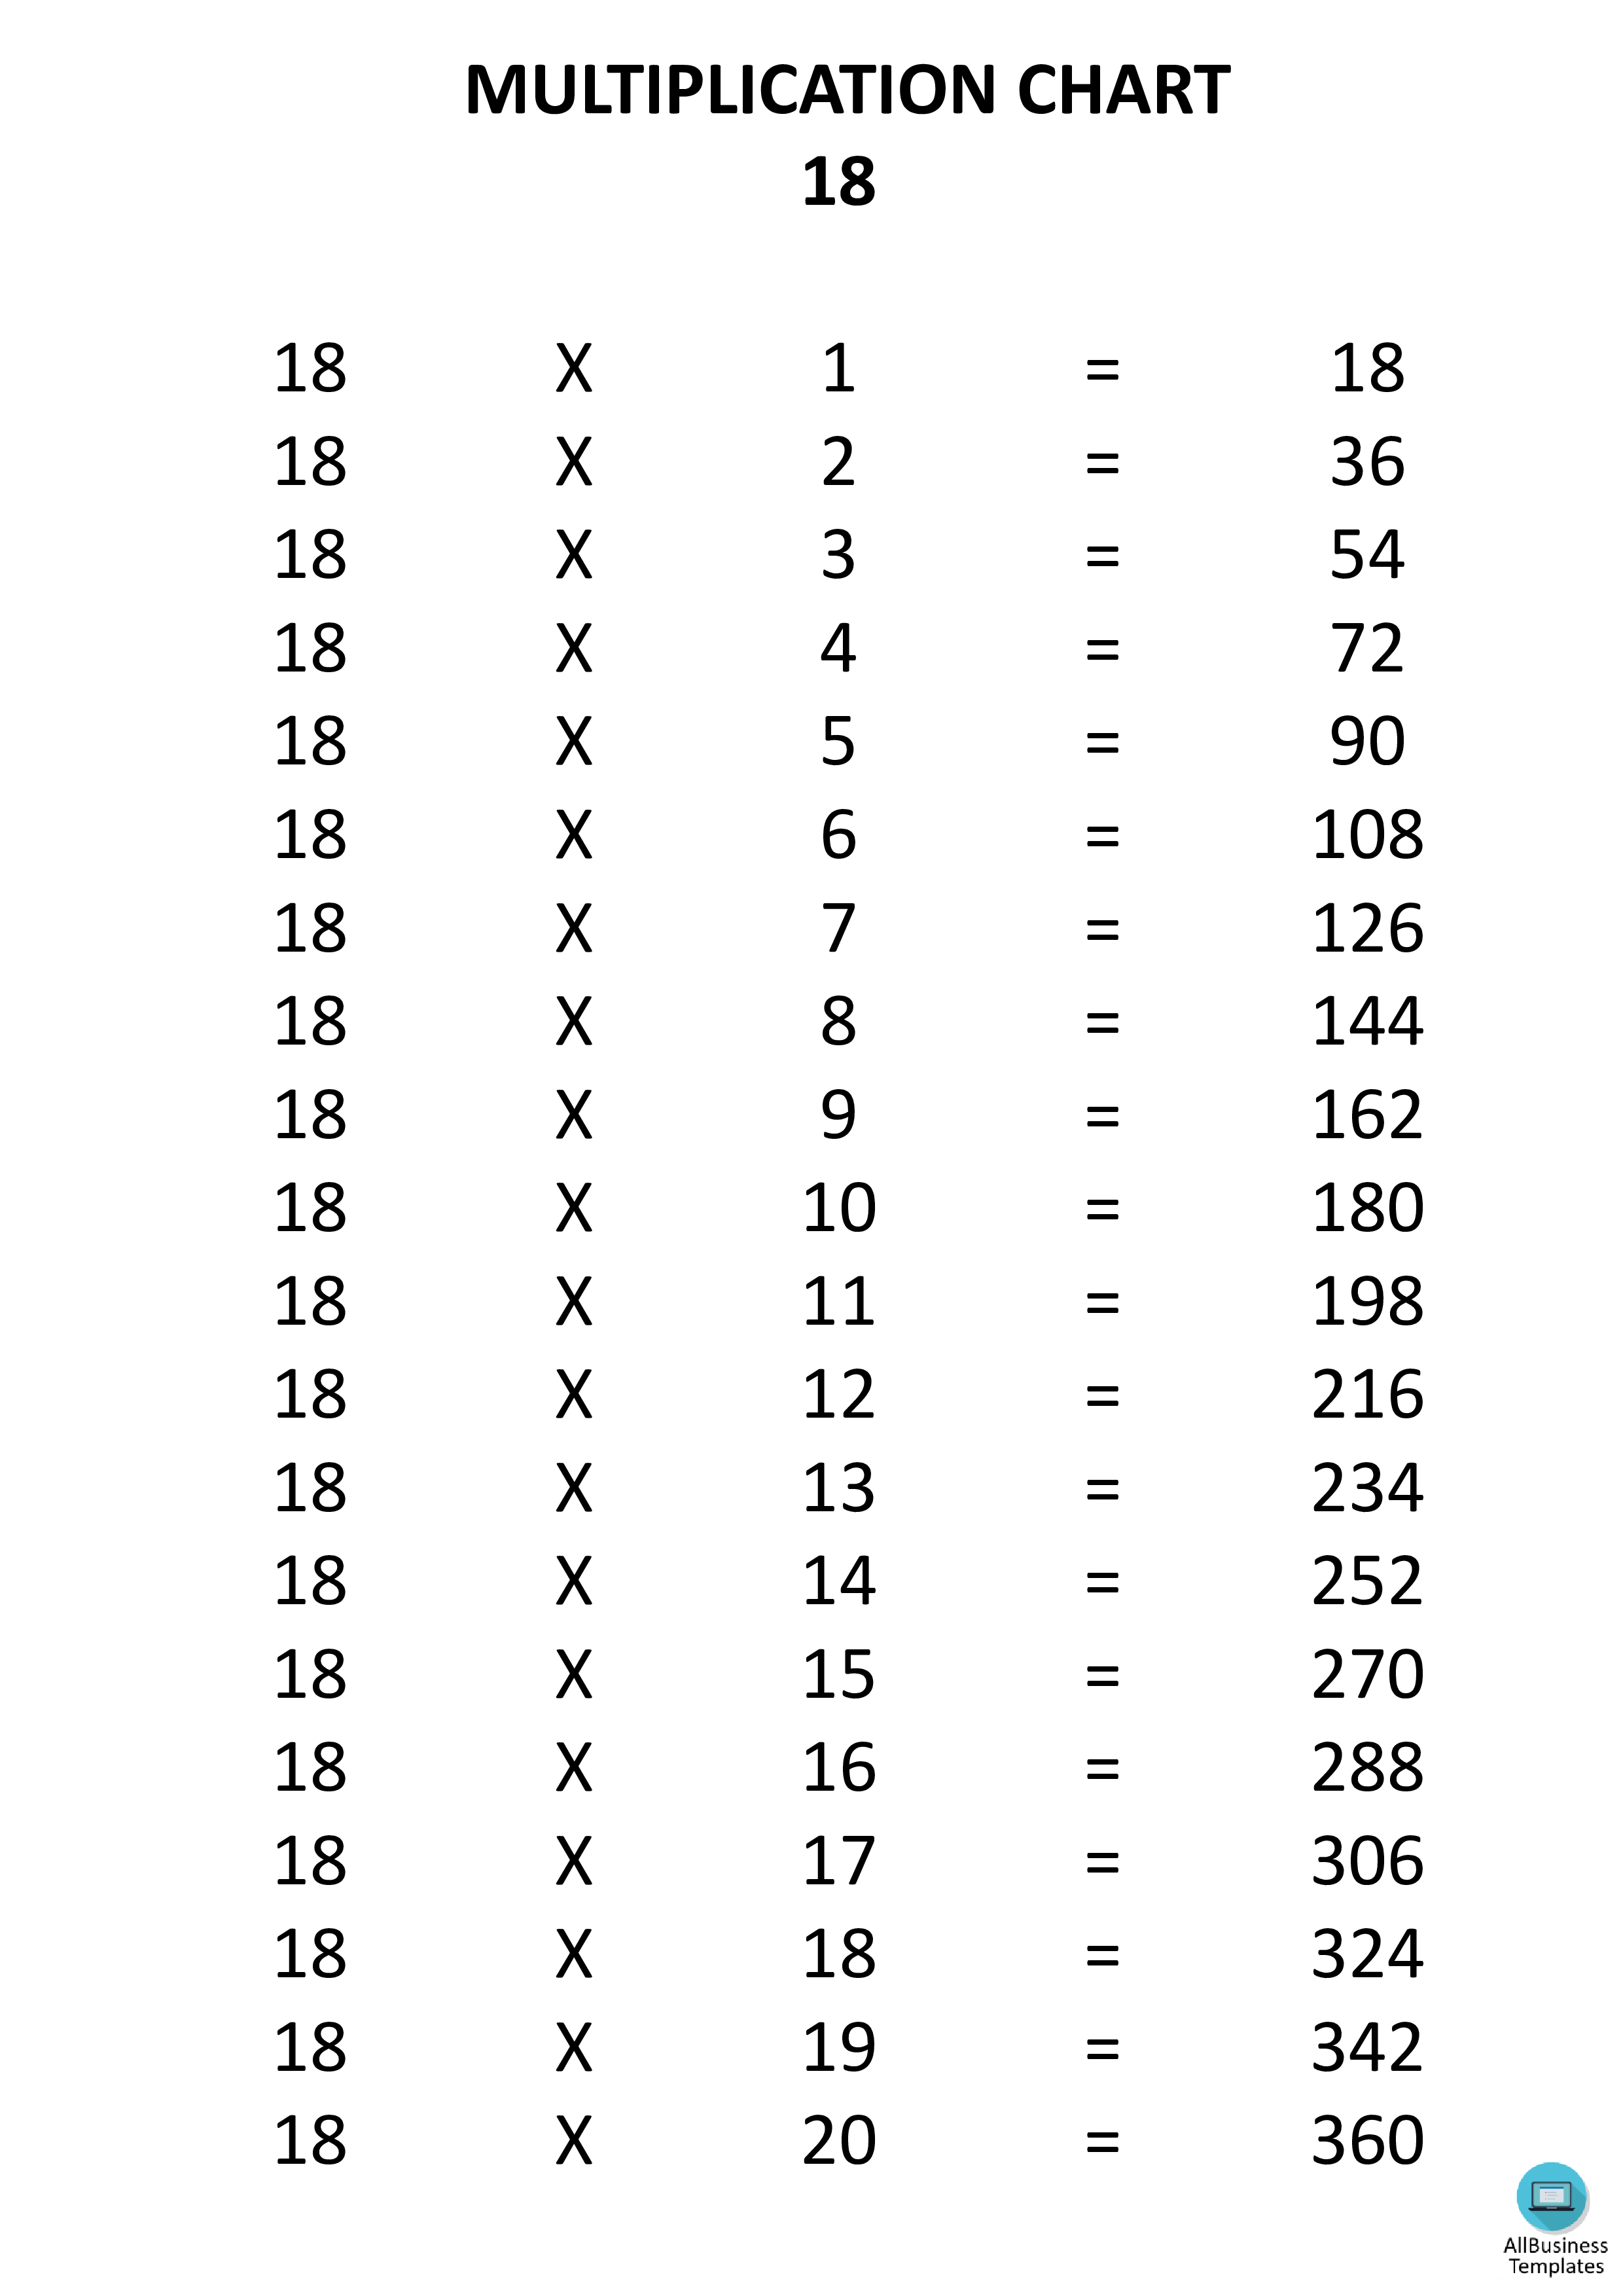 multiplication chart x18 plantilla imagen principal